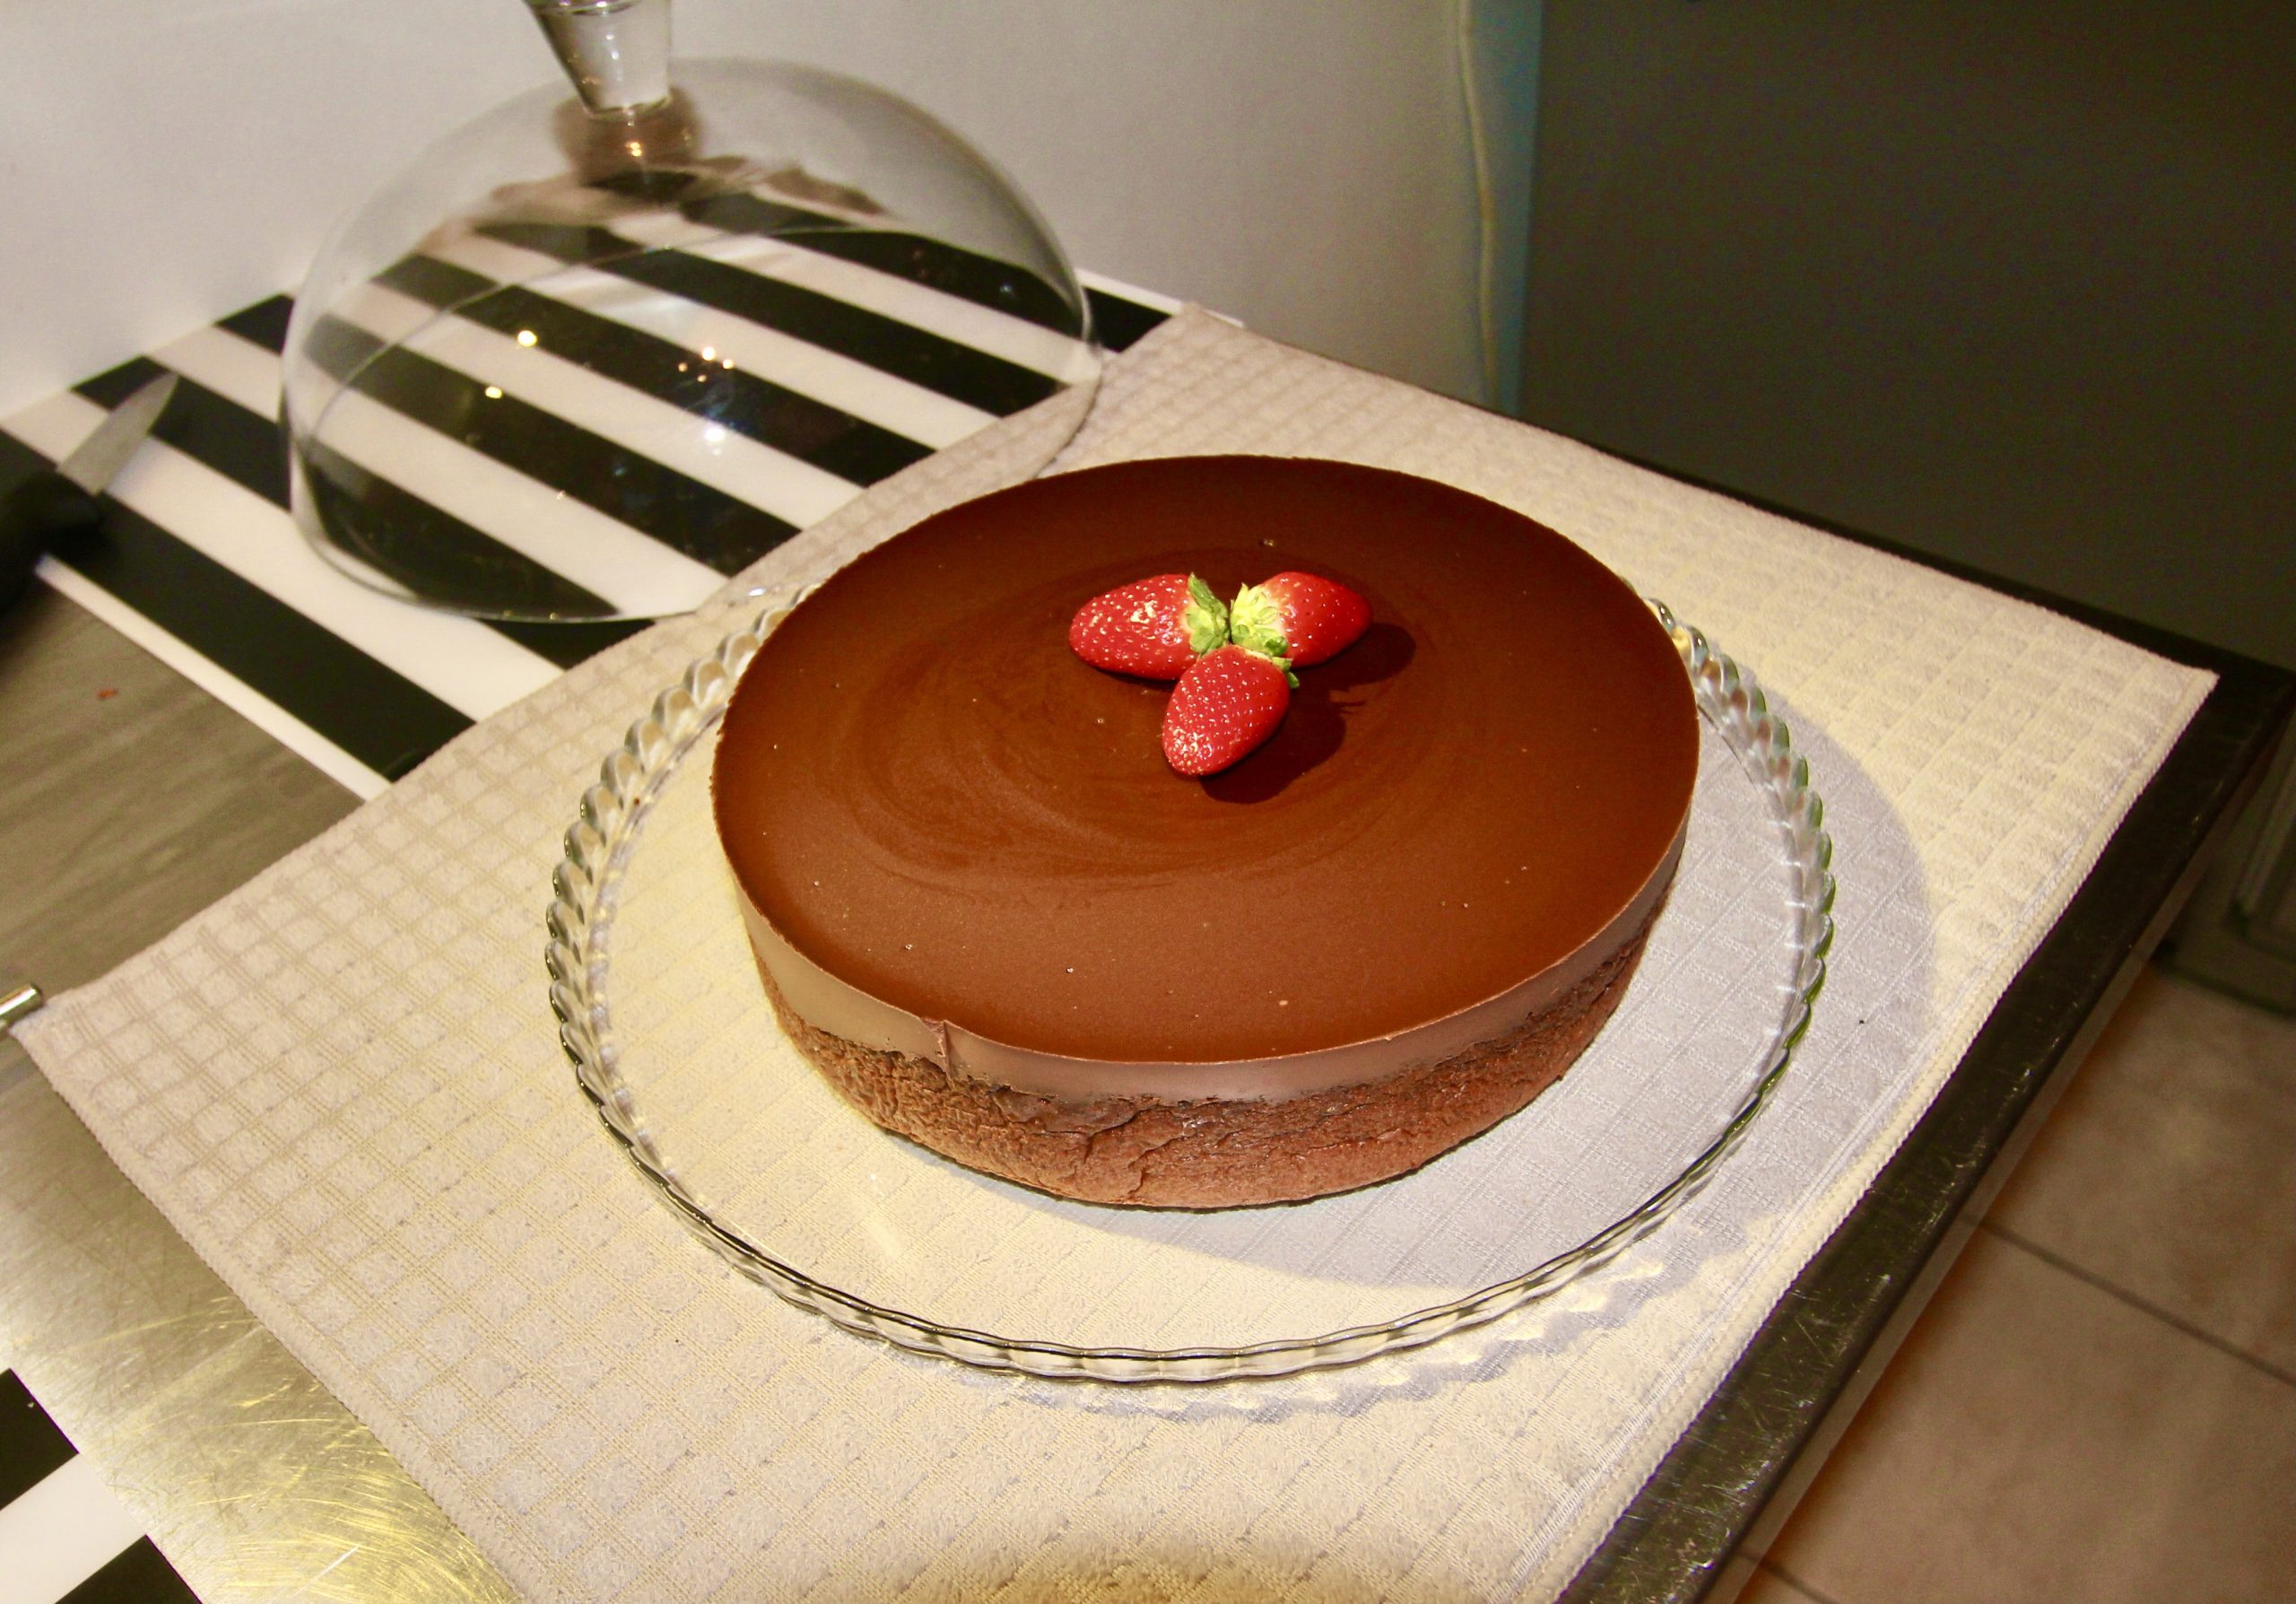 Rich chocolate cake with hazelnuts